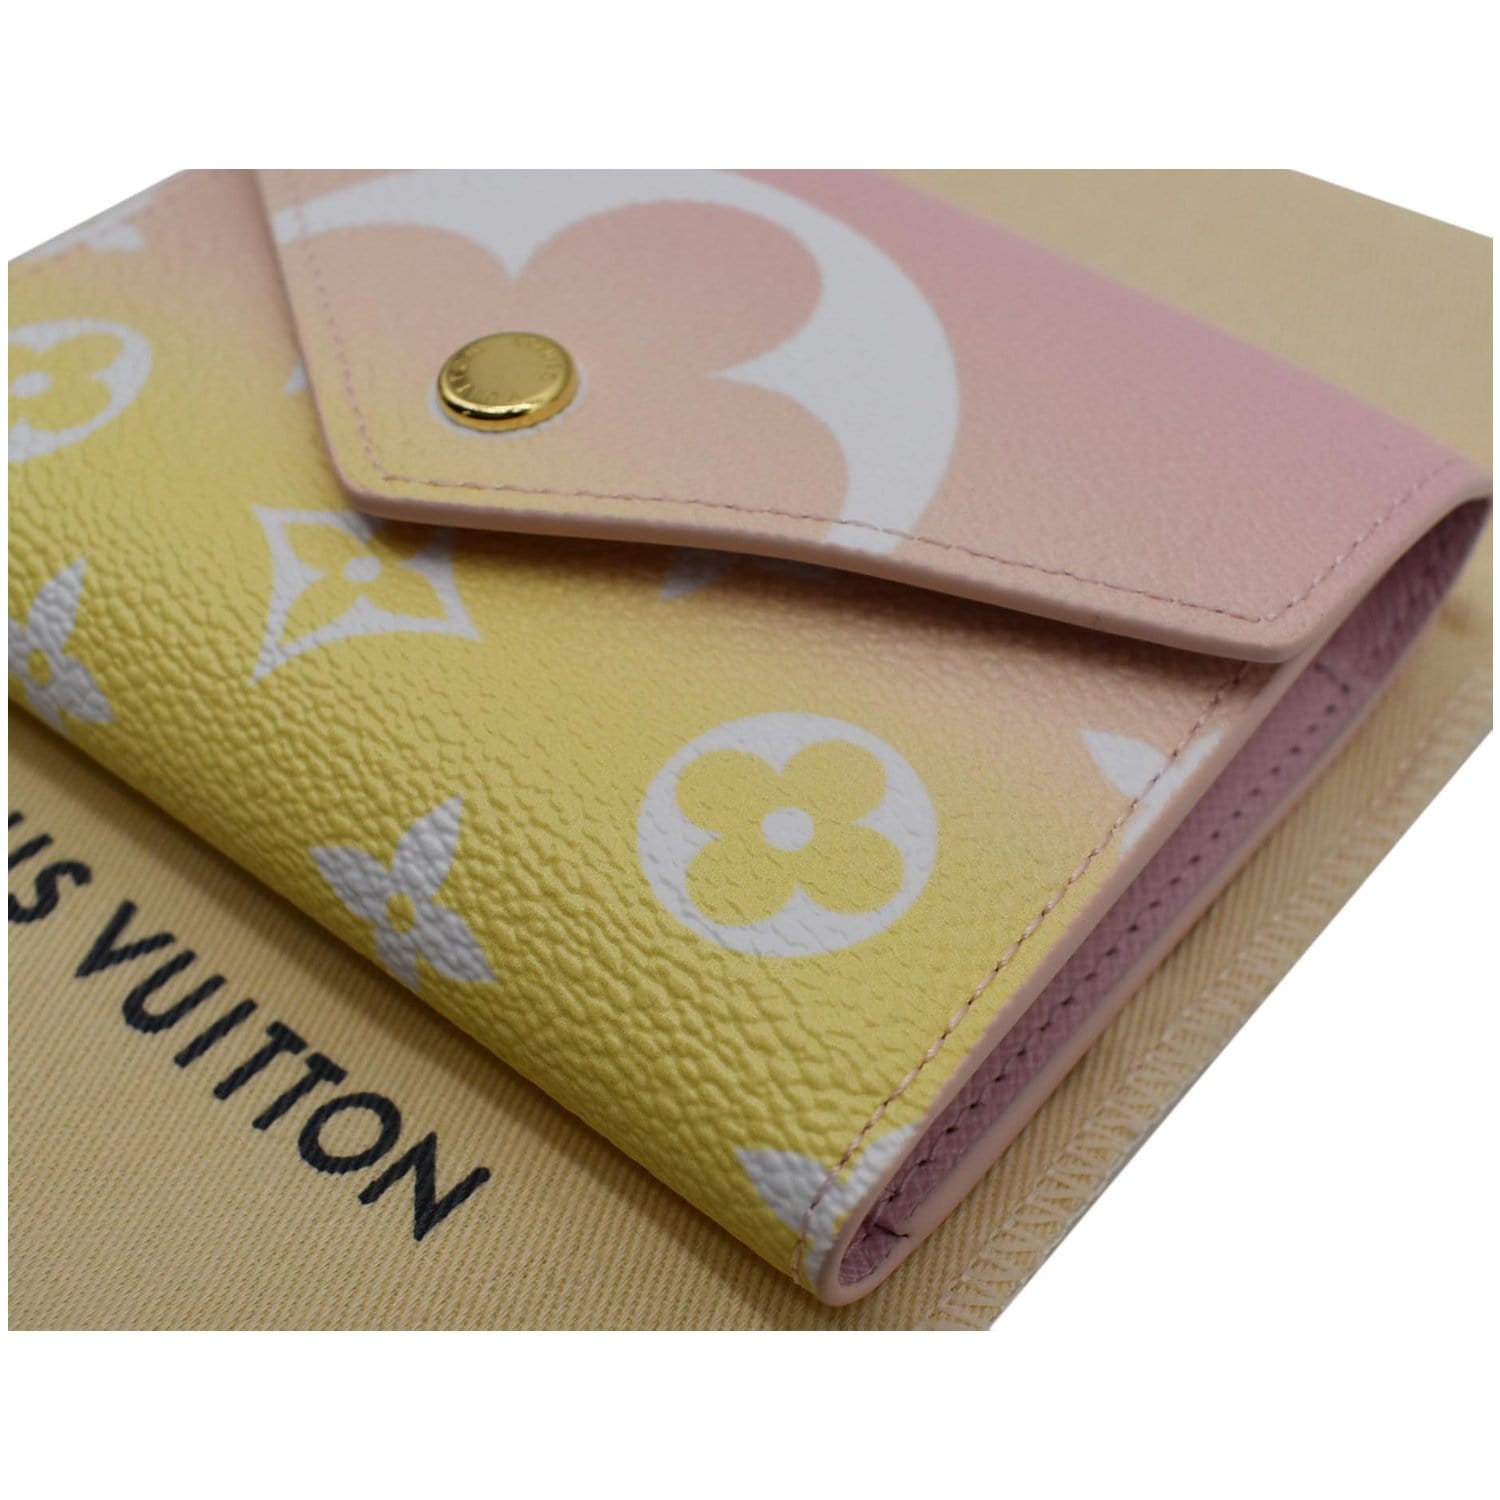 Louis Vuitton M82234 Victorine Wallet, Pink, One Size